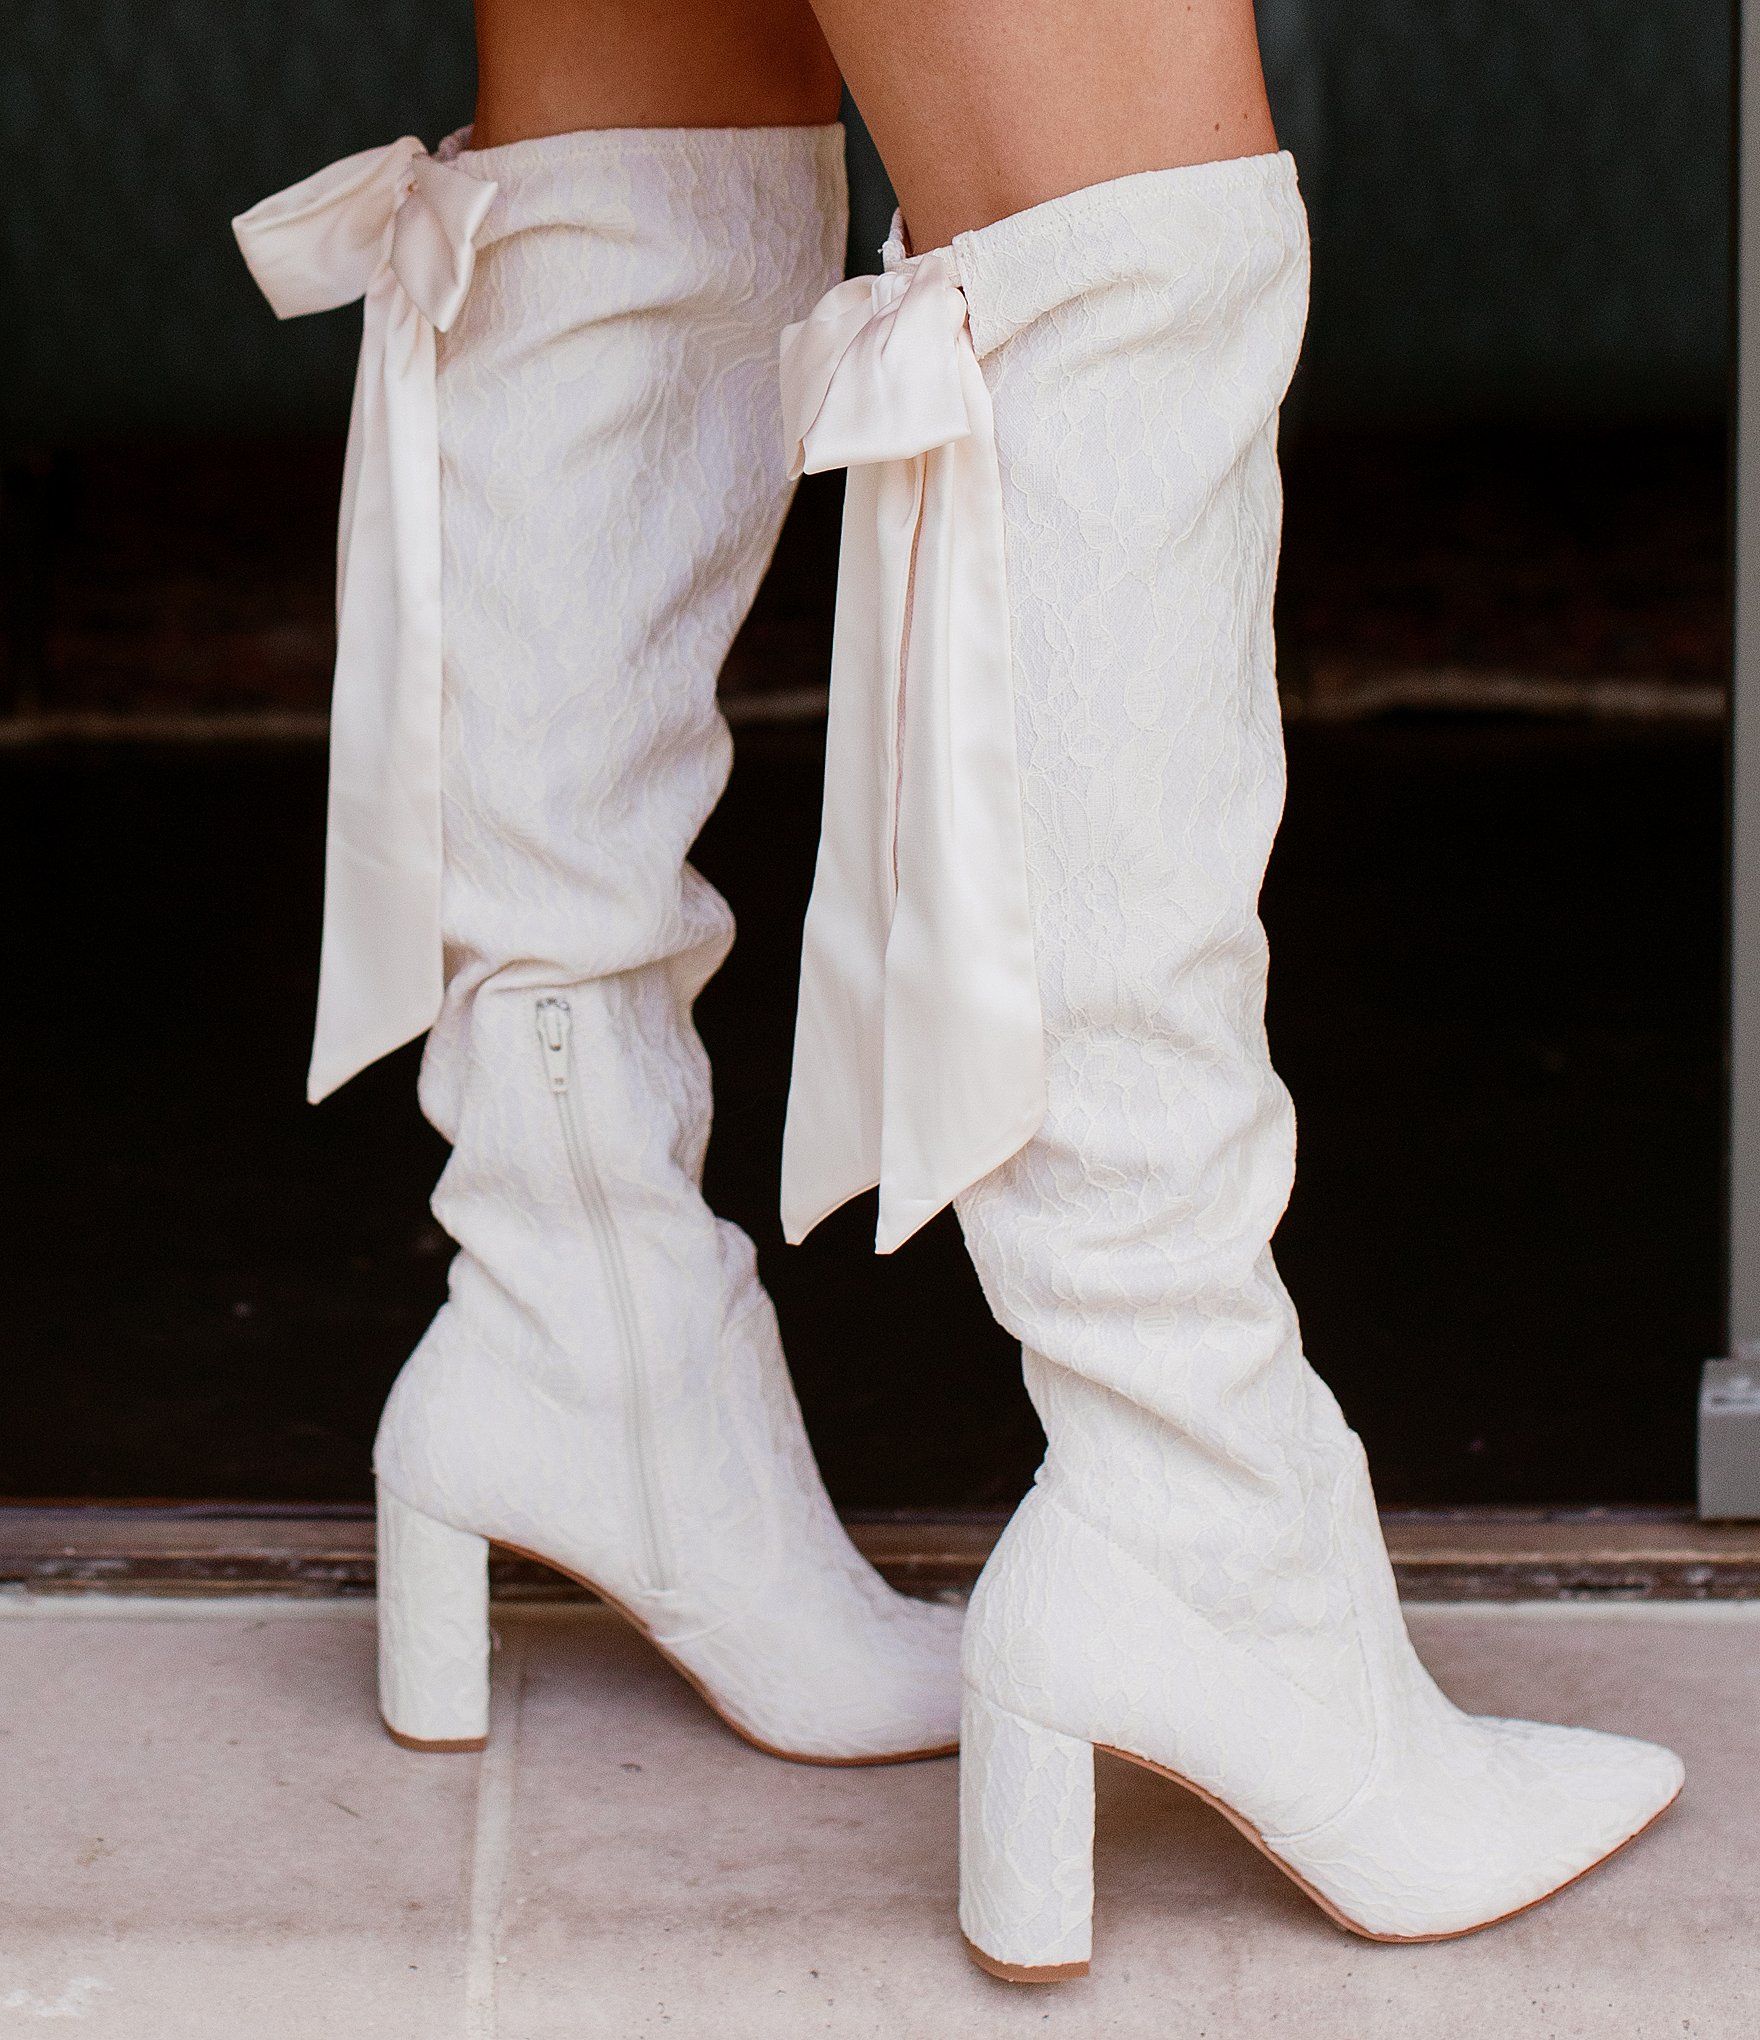 x Nicola Bathie Nicola Slim Calf Over-the-Knee Lace Detailed Silk Bow Dress Boots | Dillard's